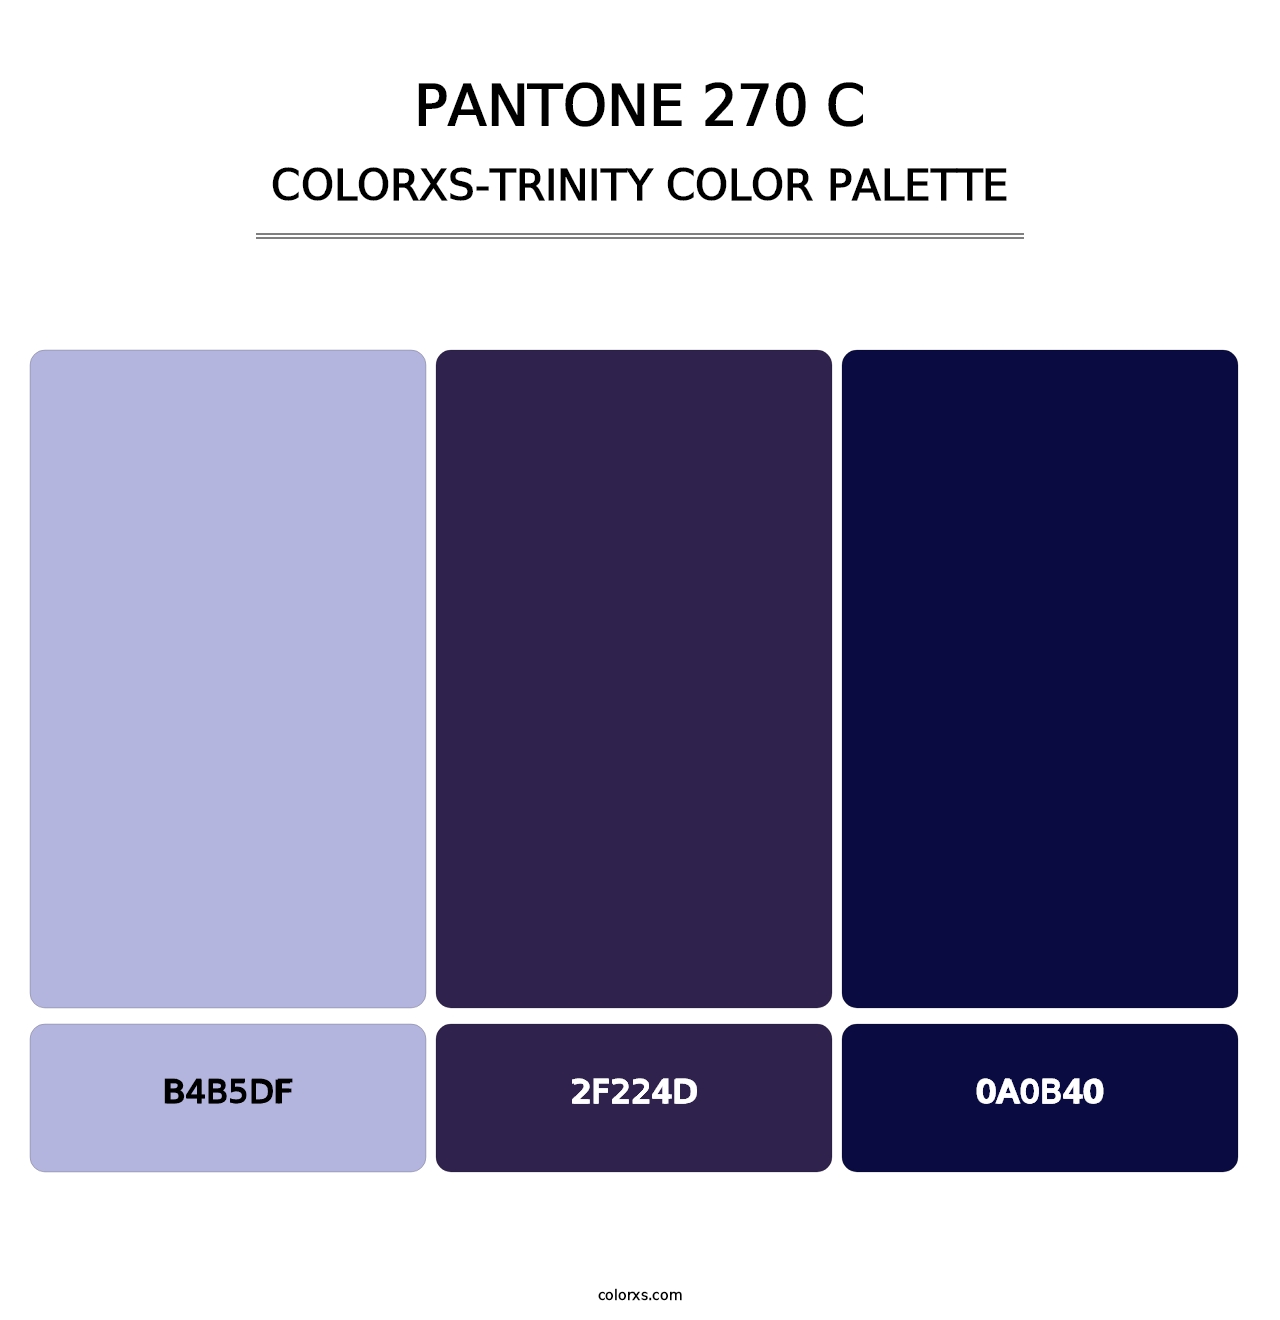 PANTONE 270 C - Colorxs Trinity Palette